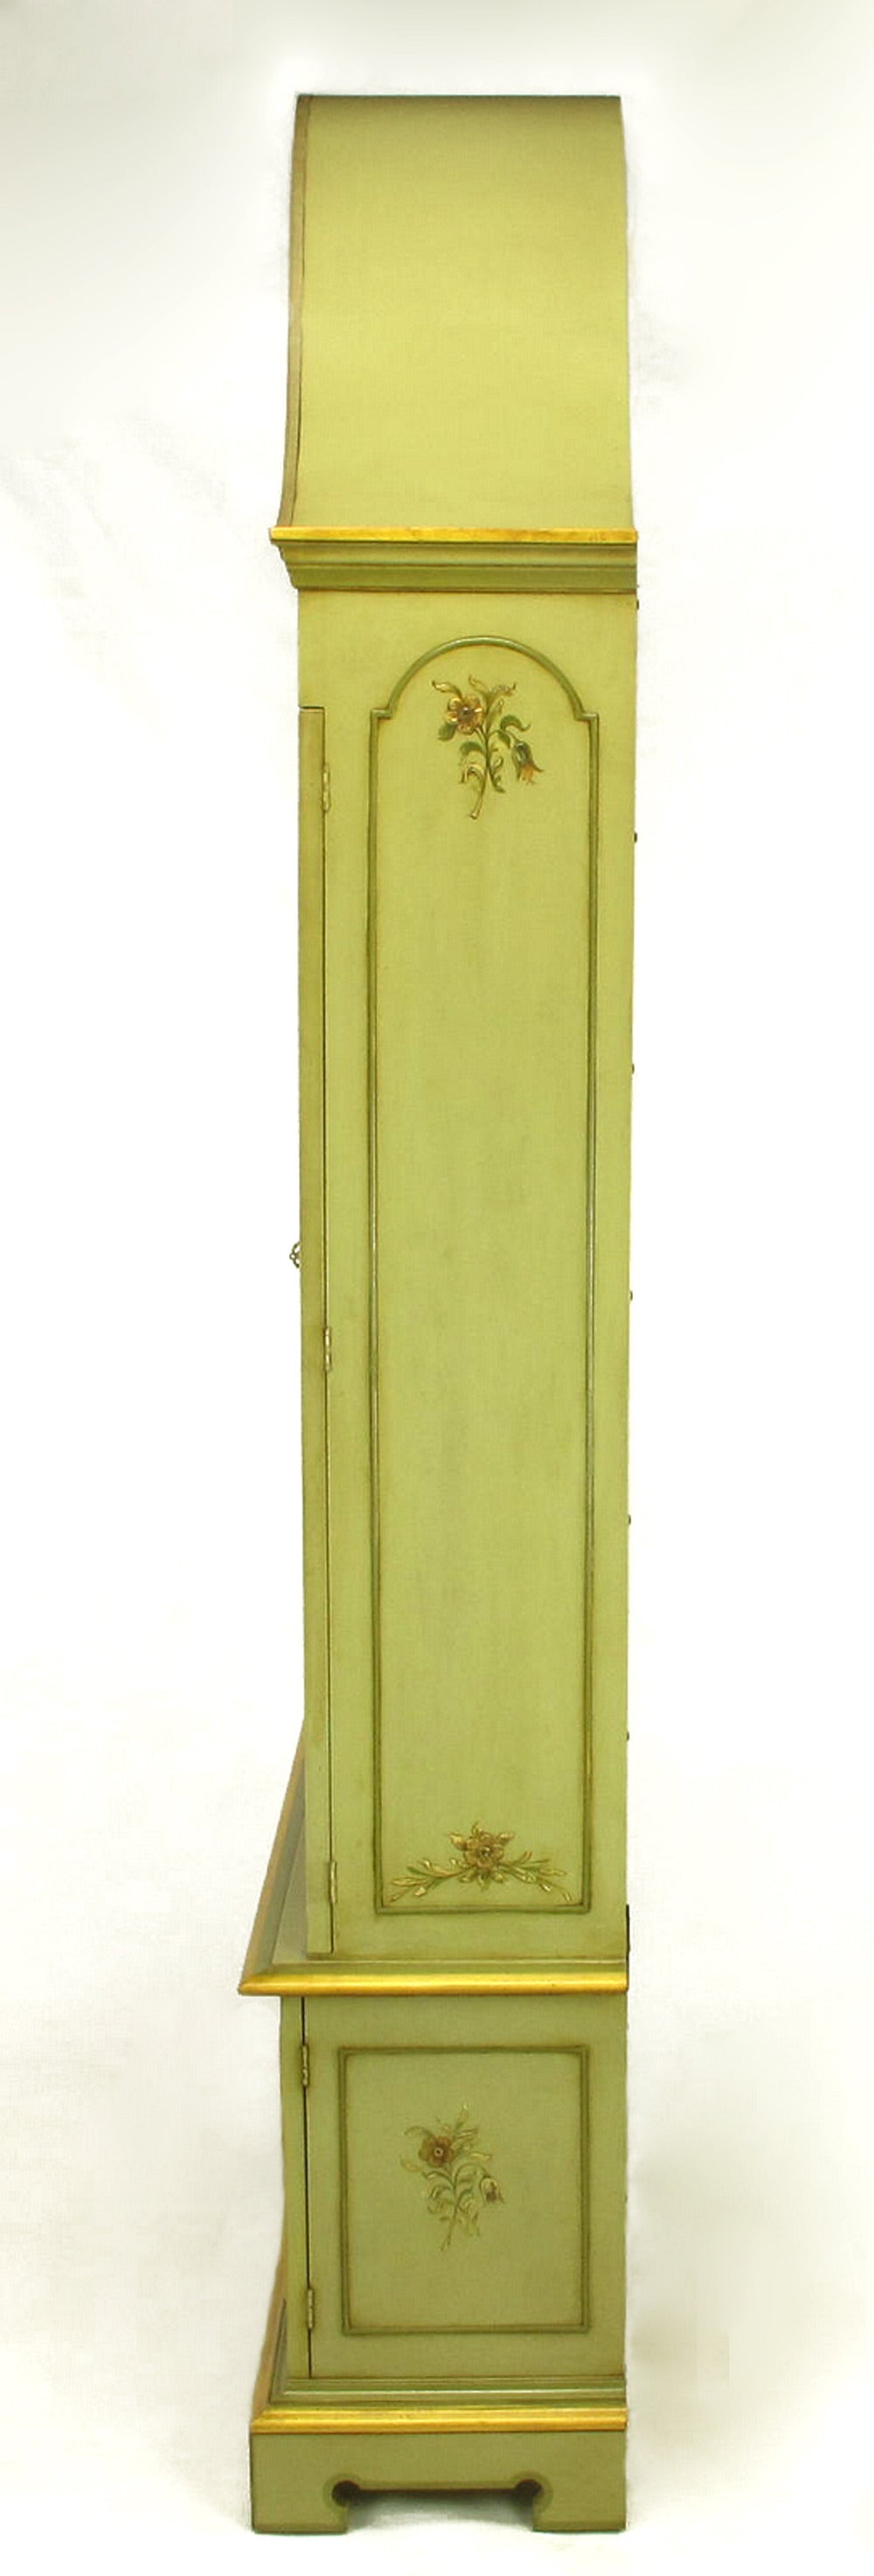 Gilt Pair of John Widdicomb Glazed Light Green Tall French Regency Display Cabinets